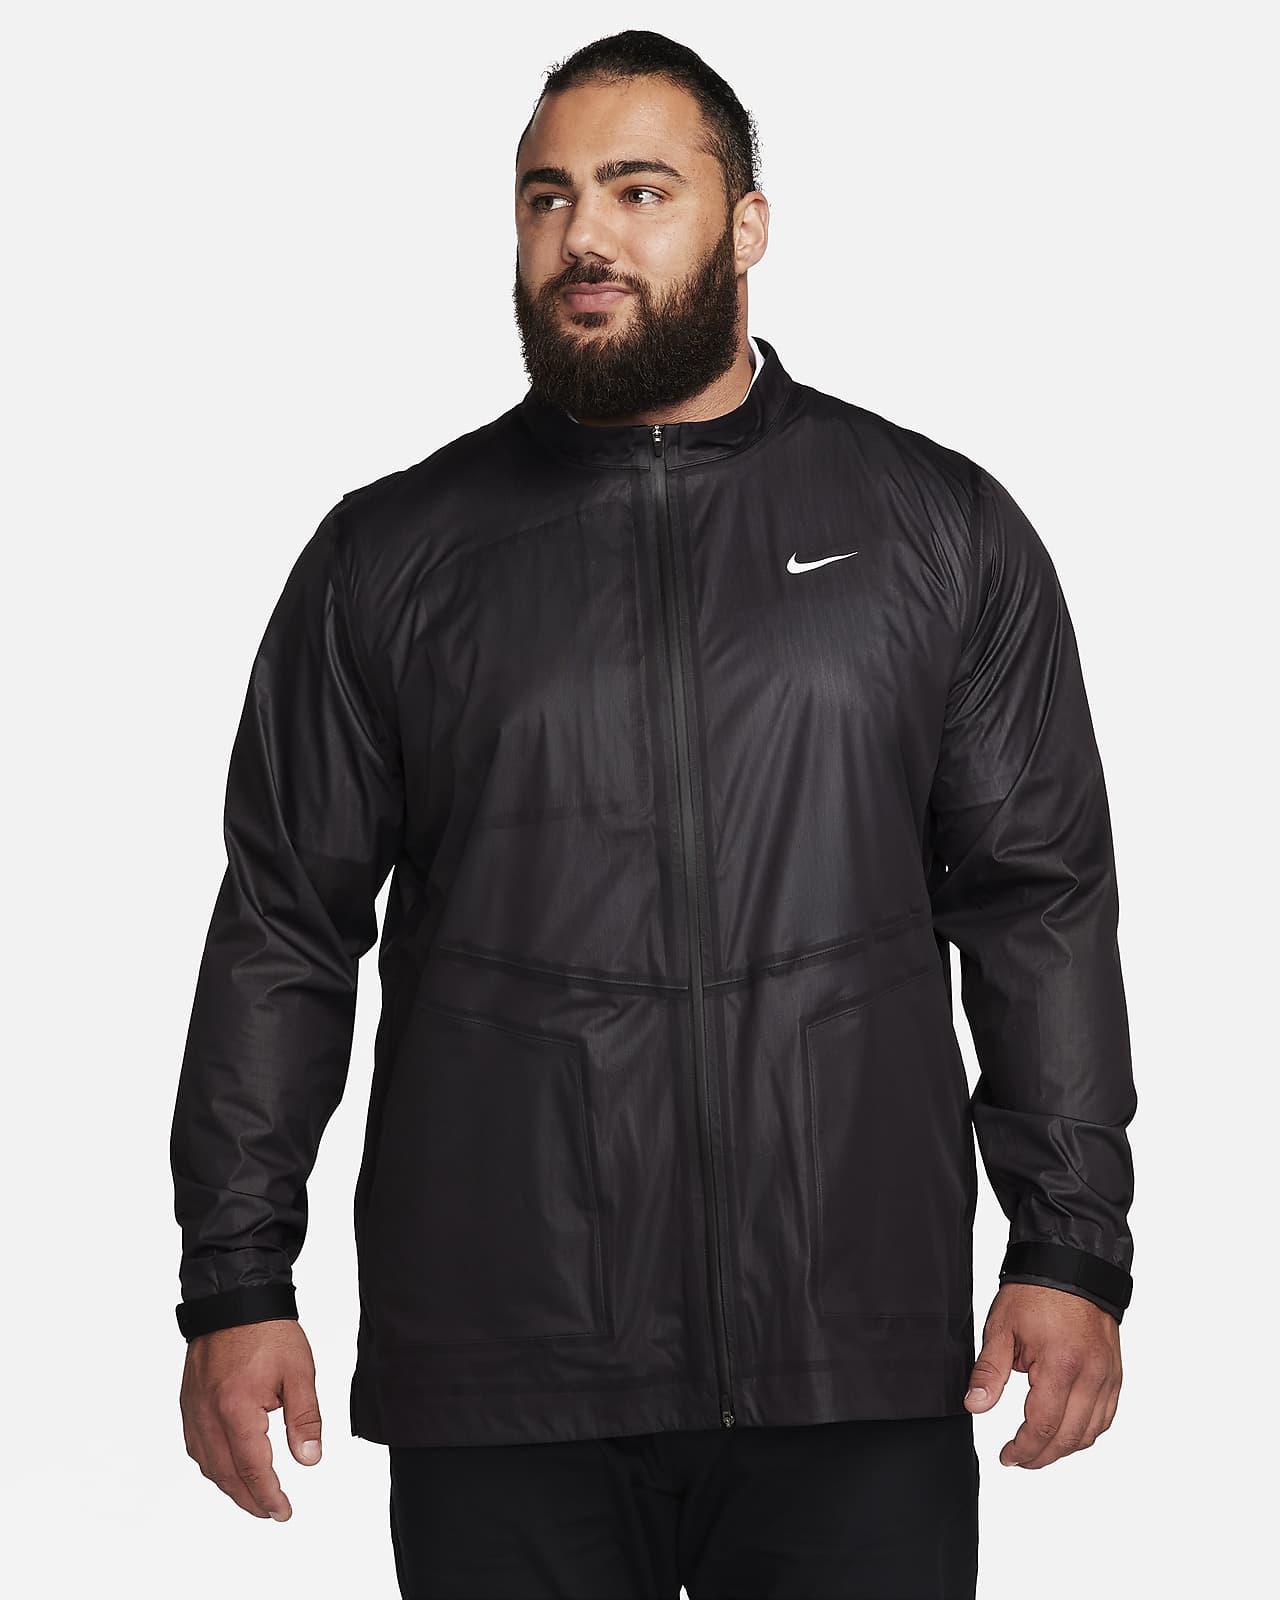 Nike Men's Storm-FIT ADV Full-Zip Golf Jacket 8263884 - Large Black